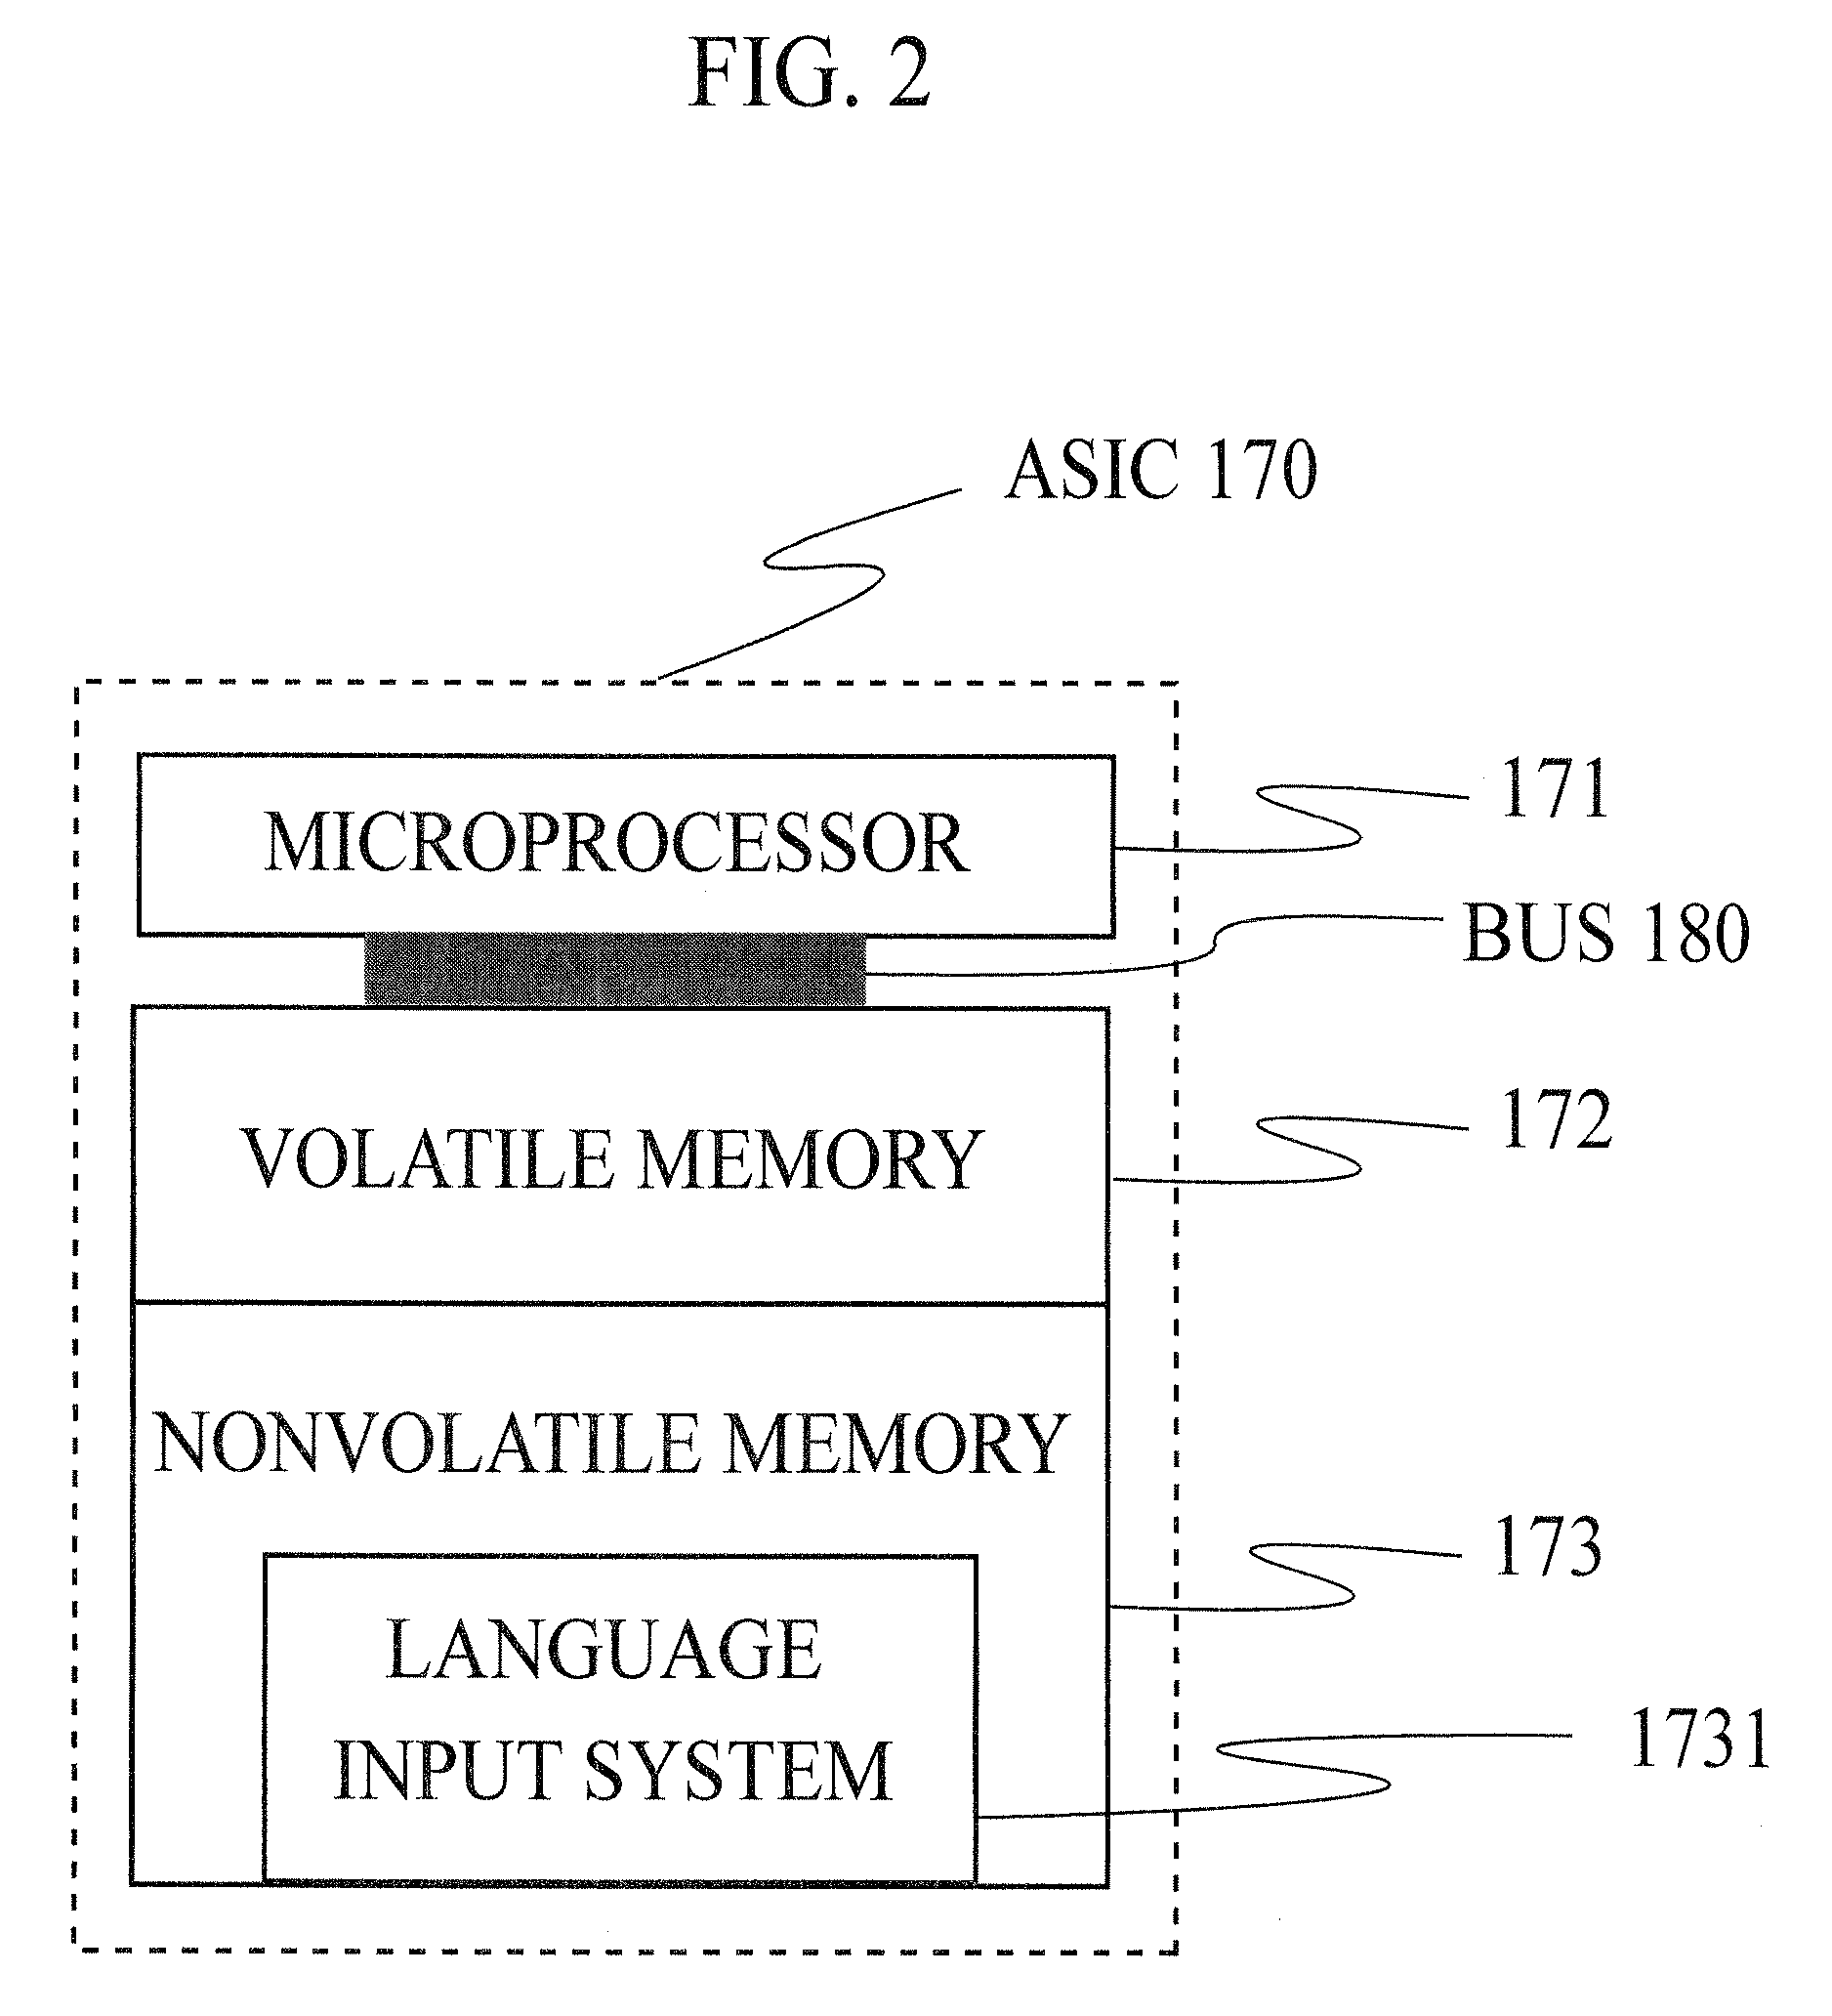 Language Input System and Method Based on Graphic Symbols